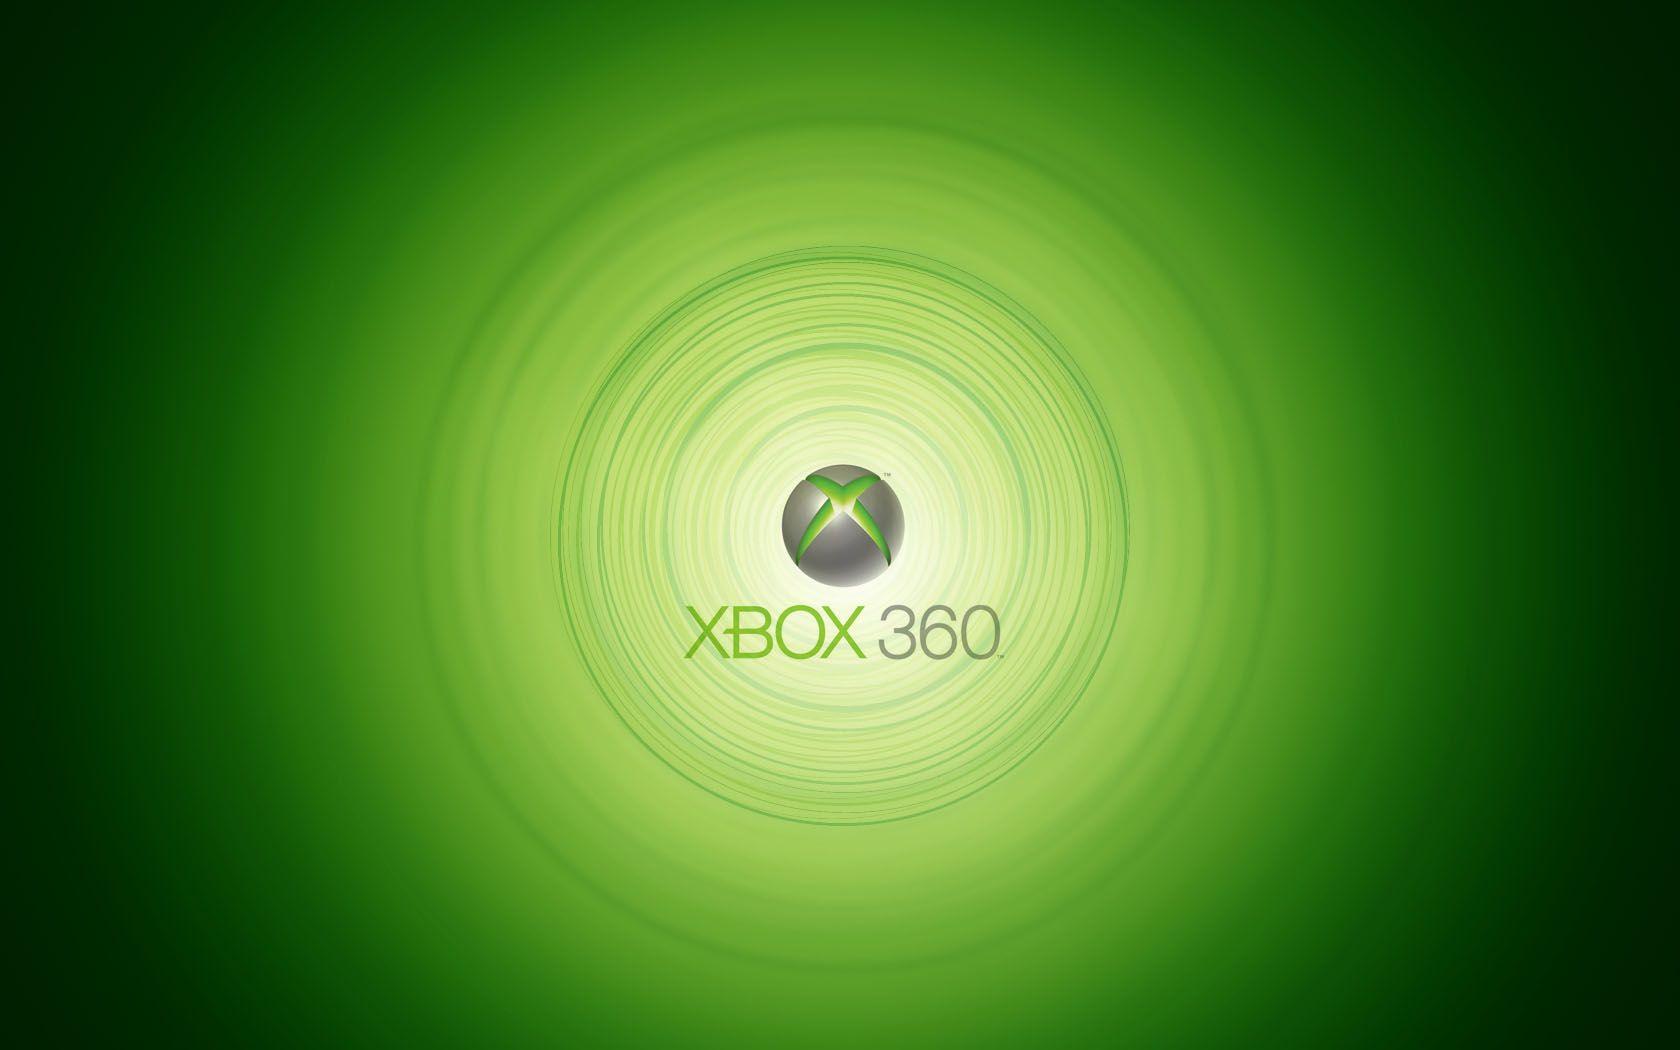 Xbox 360 HD Picture by Nikolas Pasternak on FeelGrafix